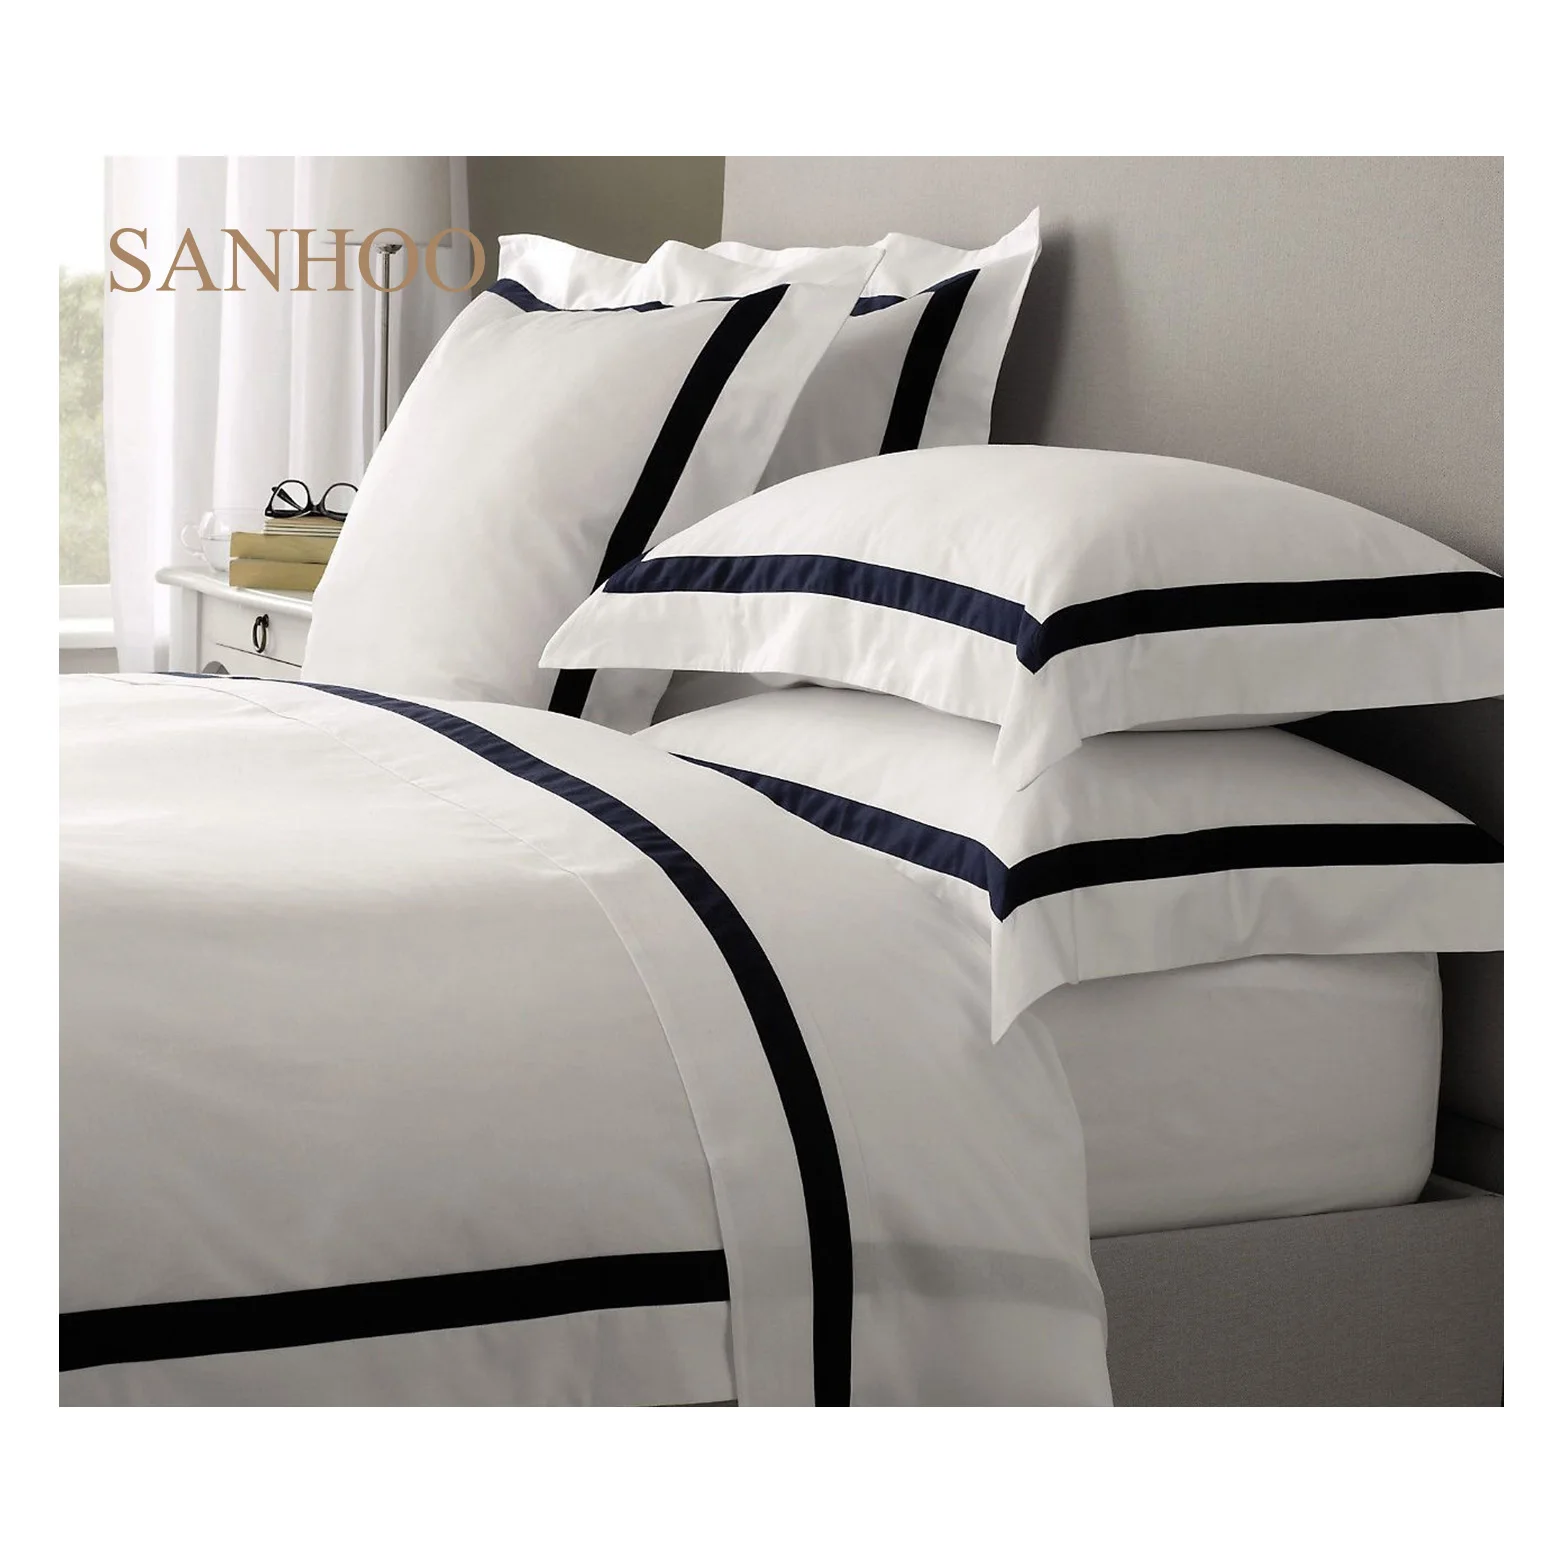 SANHOO Luxury 100 Cotton 5 Star Hotel Bedding 400 Thread Count Queen Hilton White Fitted Bedsheet Set